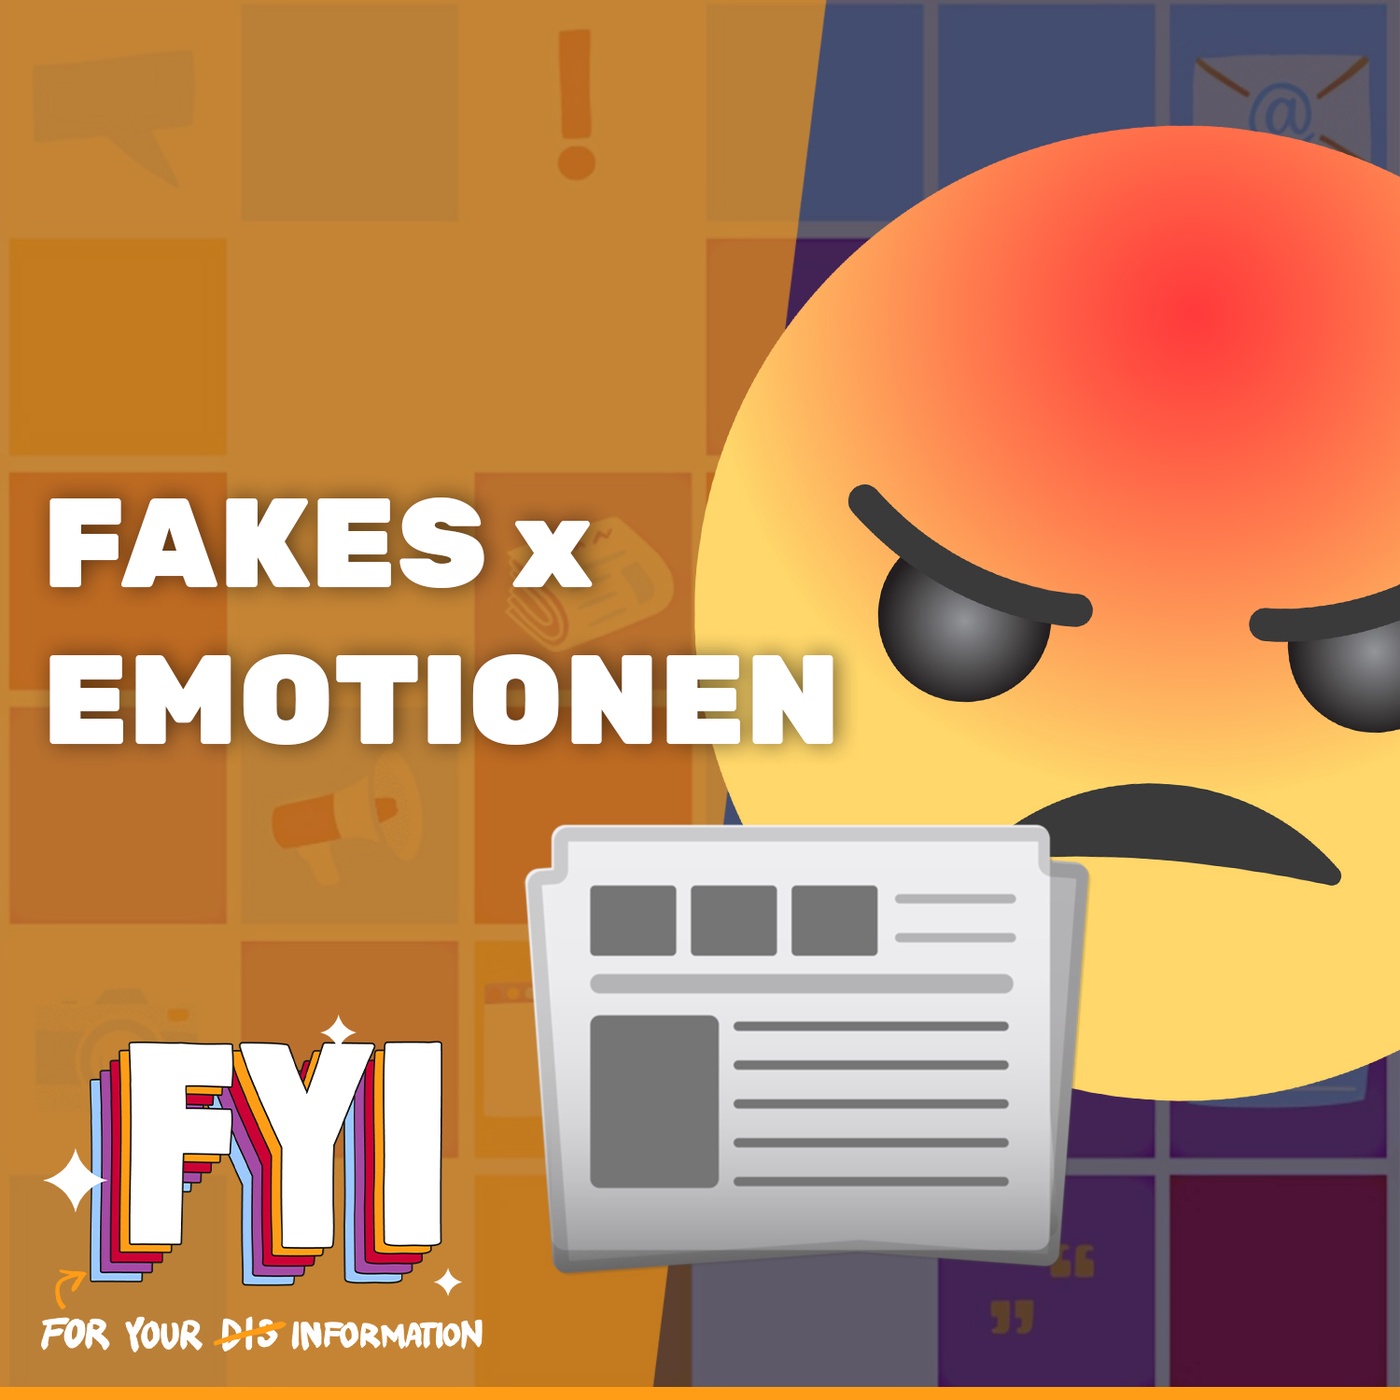 Fakes x Emotionen | FYI #02 mit Bastian Schlange, Sofia Kats & Leo Barina